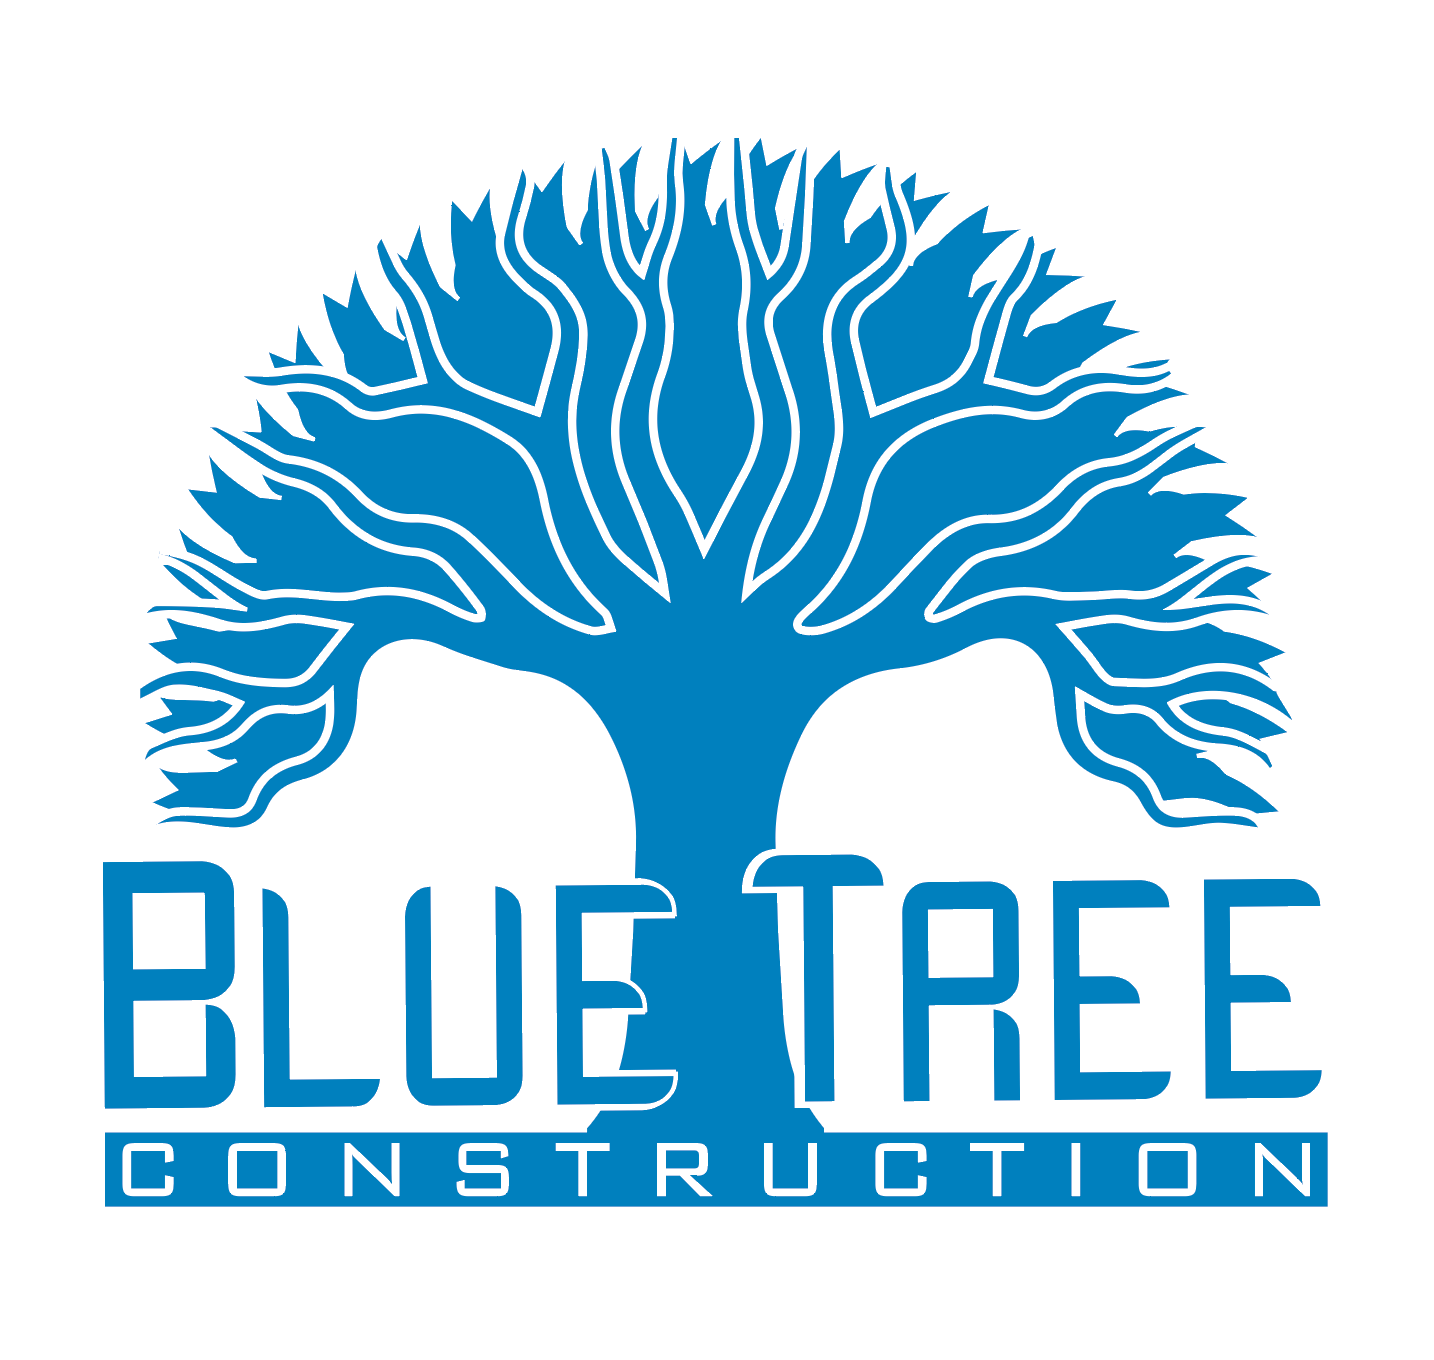 Blue Construction Logo - Logo Design for Blue Tree Construction - Graphics Design Media